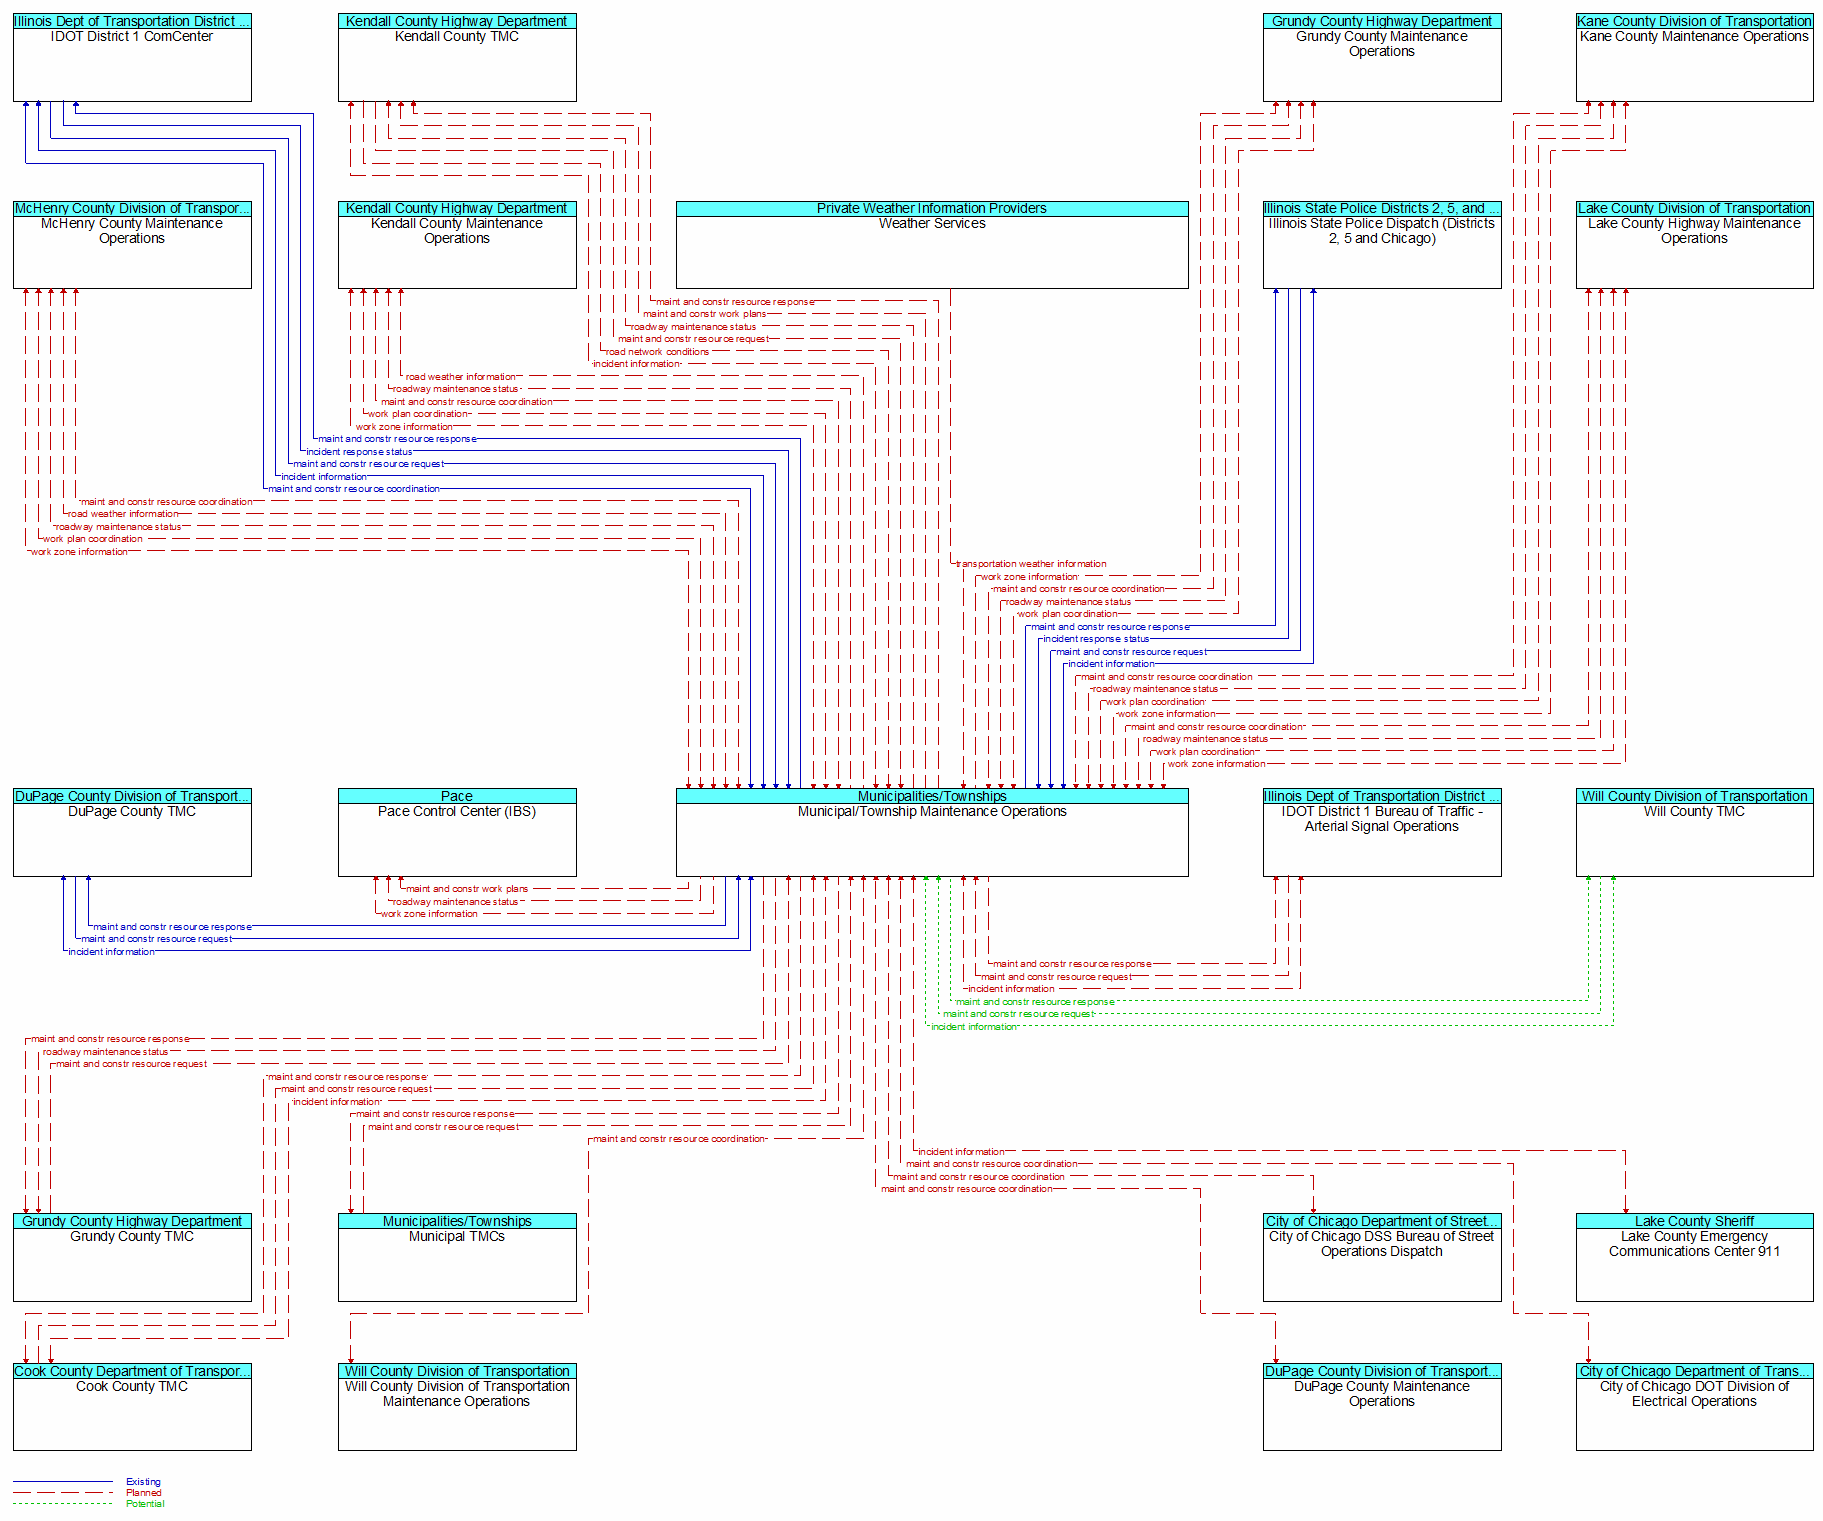 Context Diagram - Municipal/Township Maintenance Operations